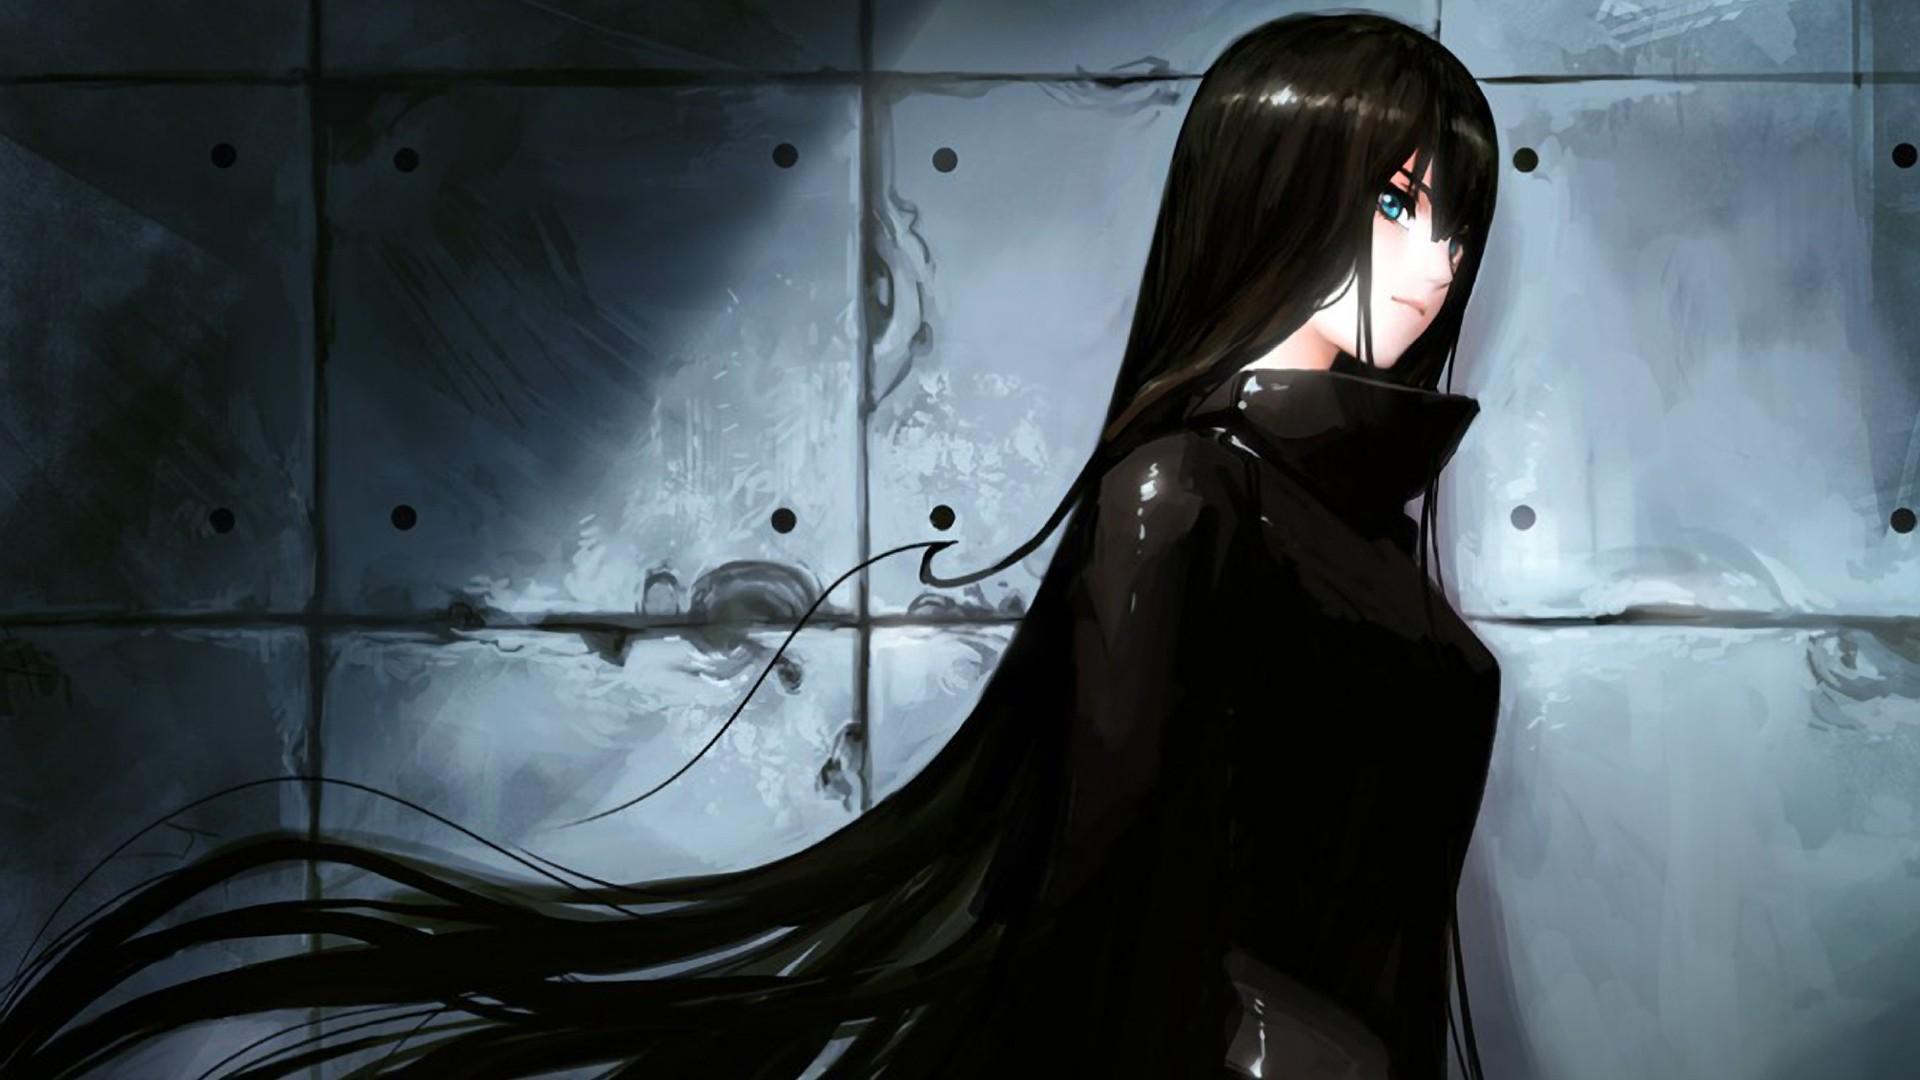 Anime Girl Long Hair Black Wallpapers - Wallpaper Cave